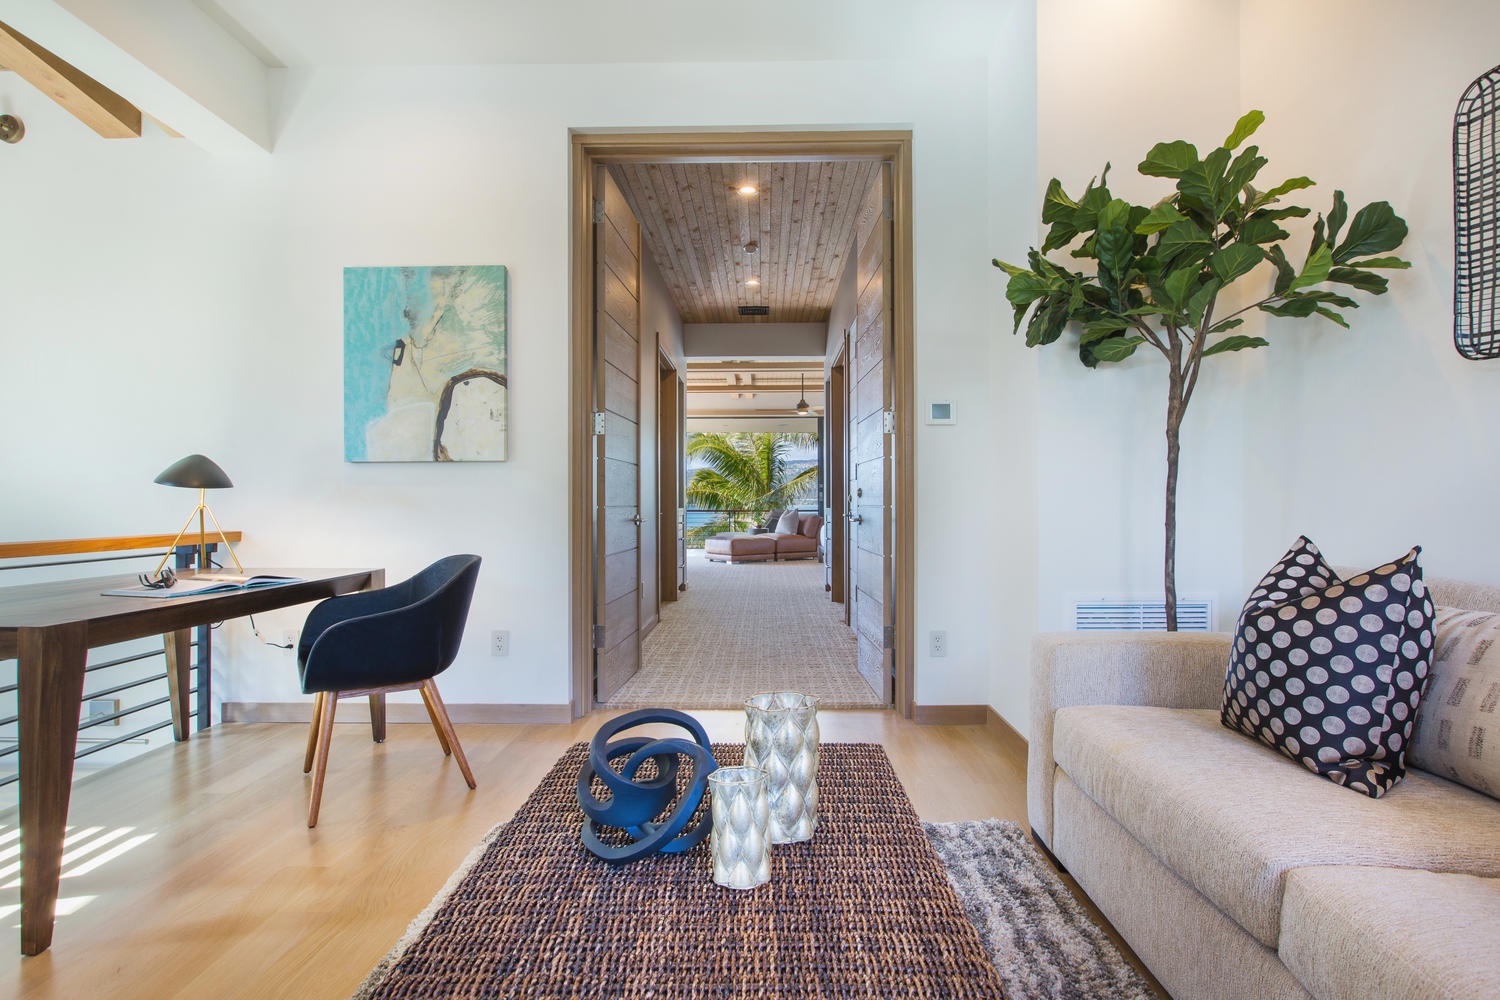 Honolulu Vacation Rentals, Ocean House 4 Bedroom - Primary bedroom lounge